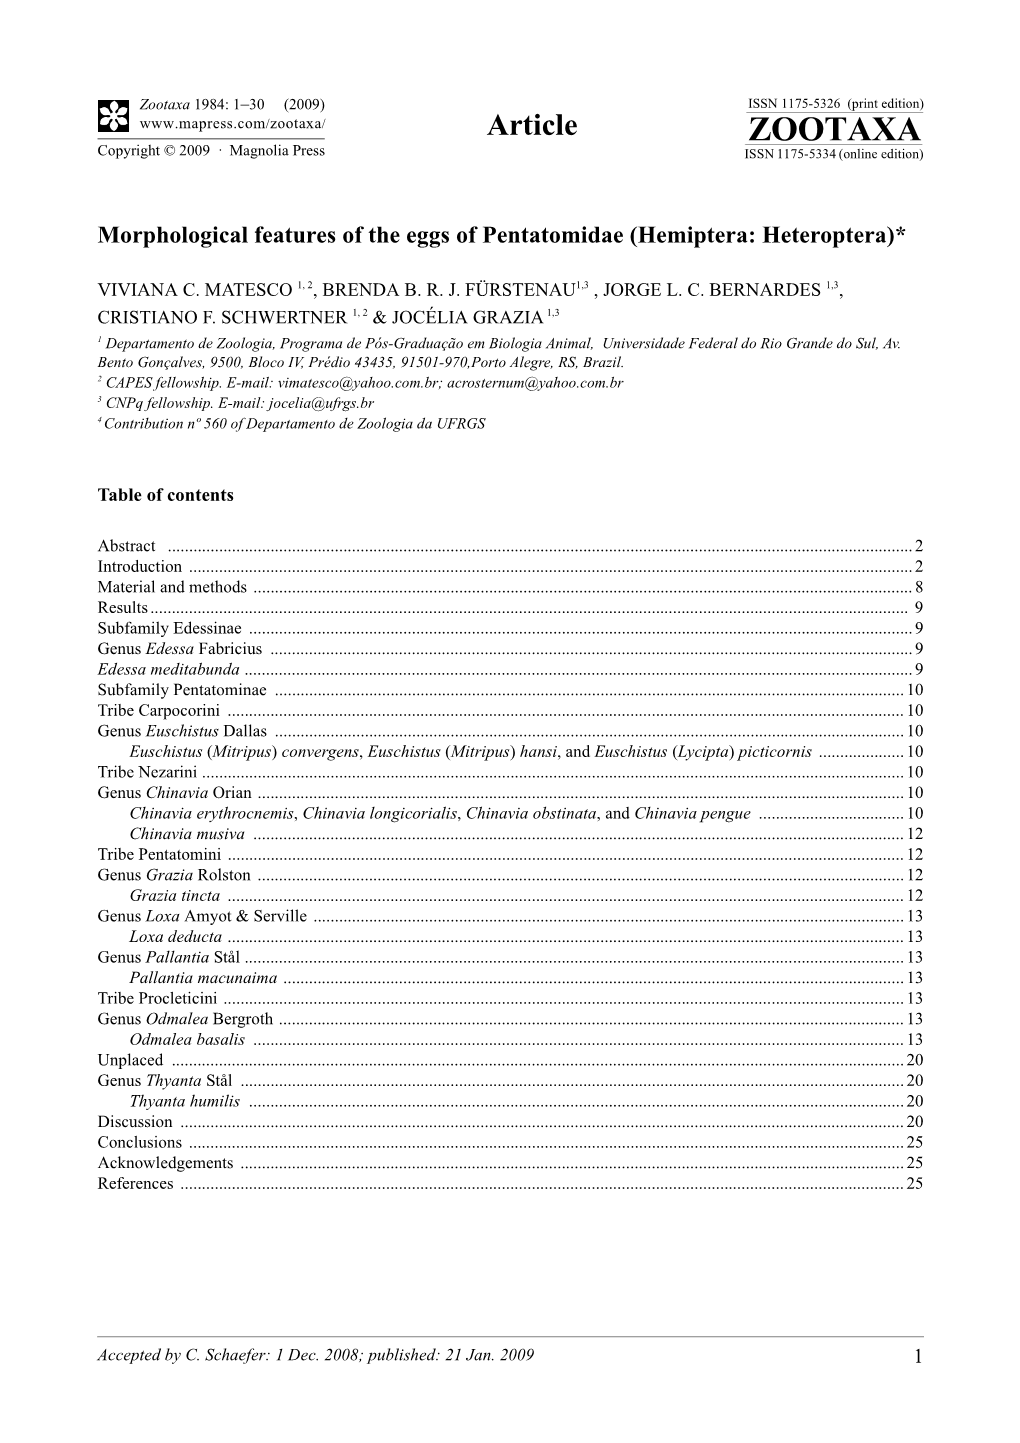 Zootaxa, Morphological Features of the Eggs of Pentatomidae (Hemiptera